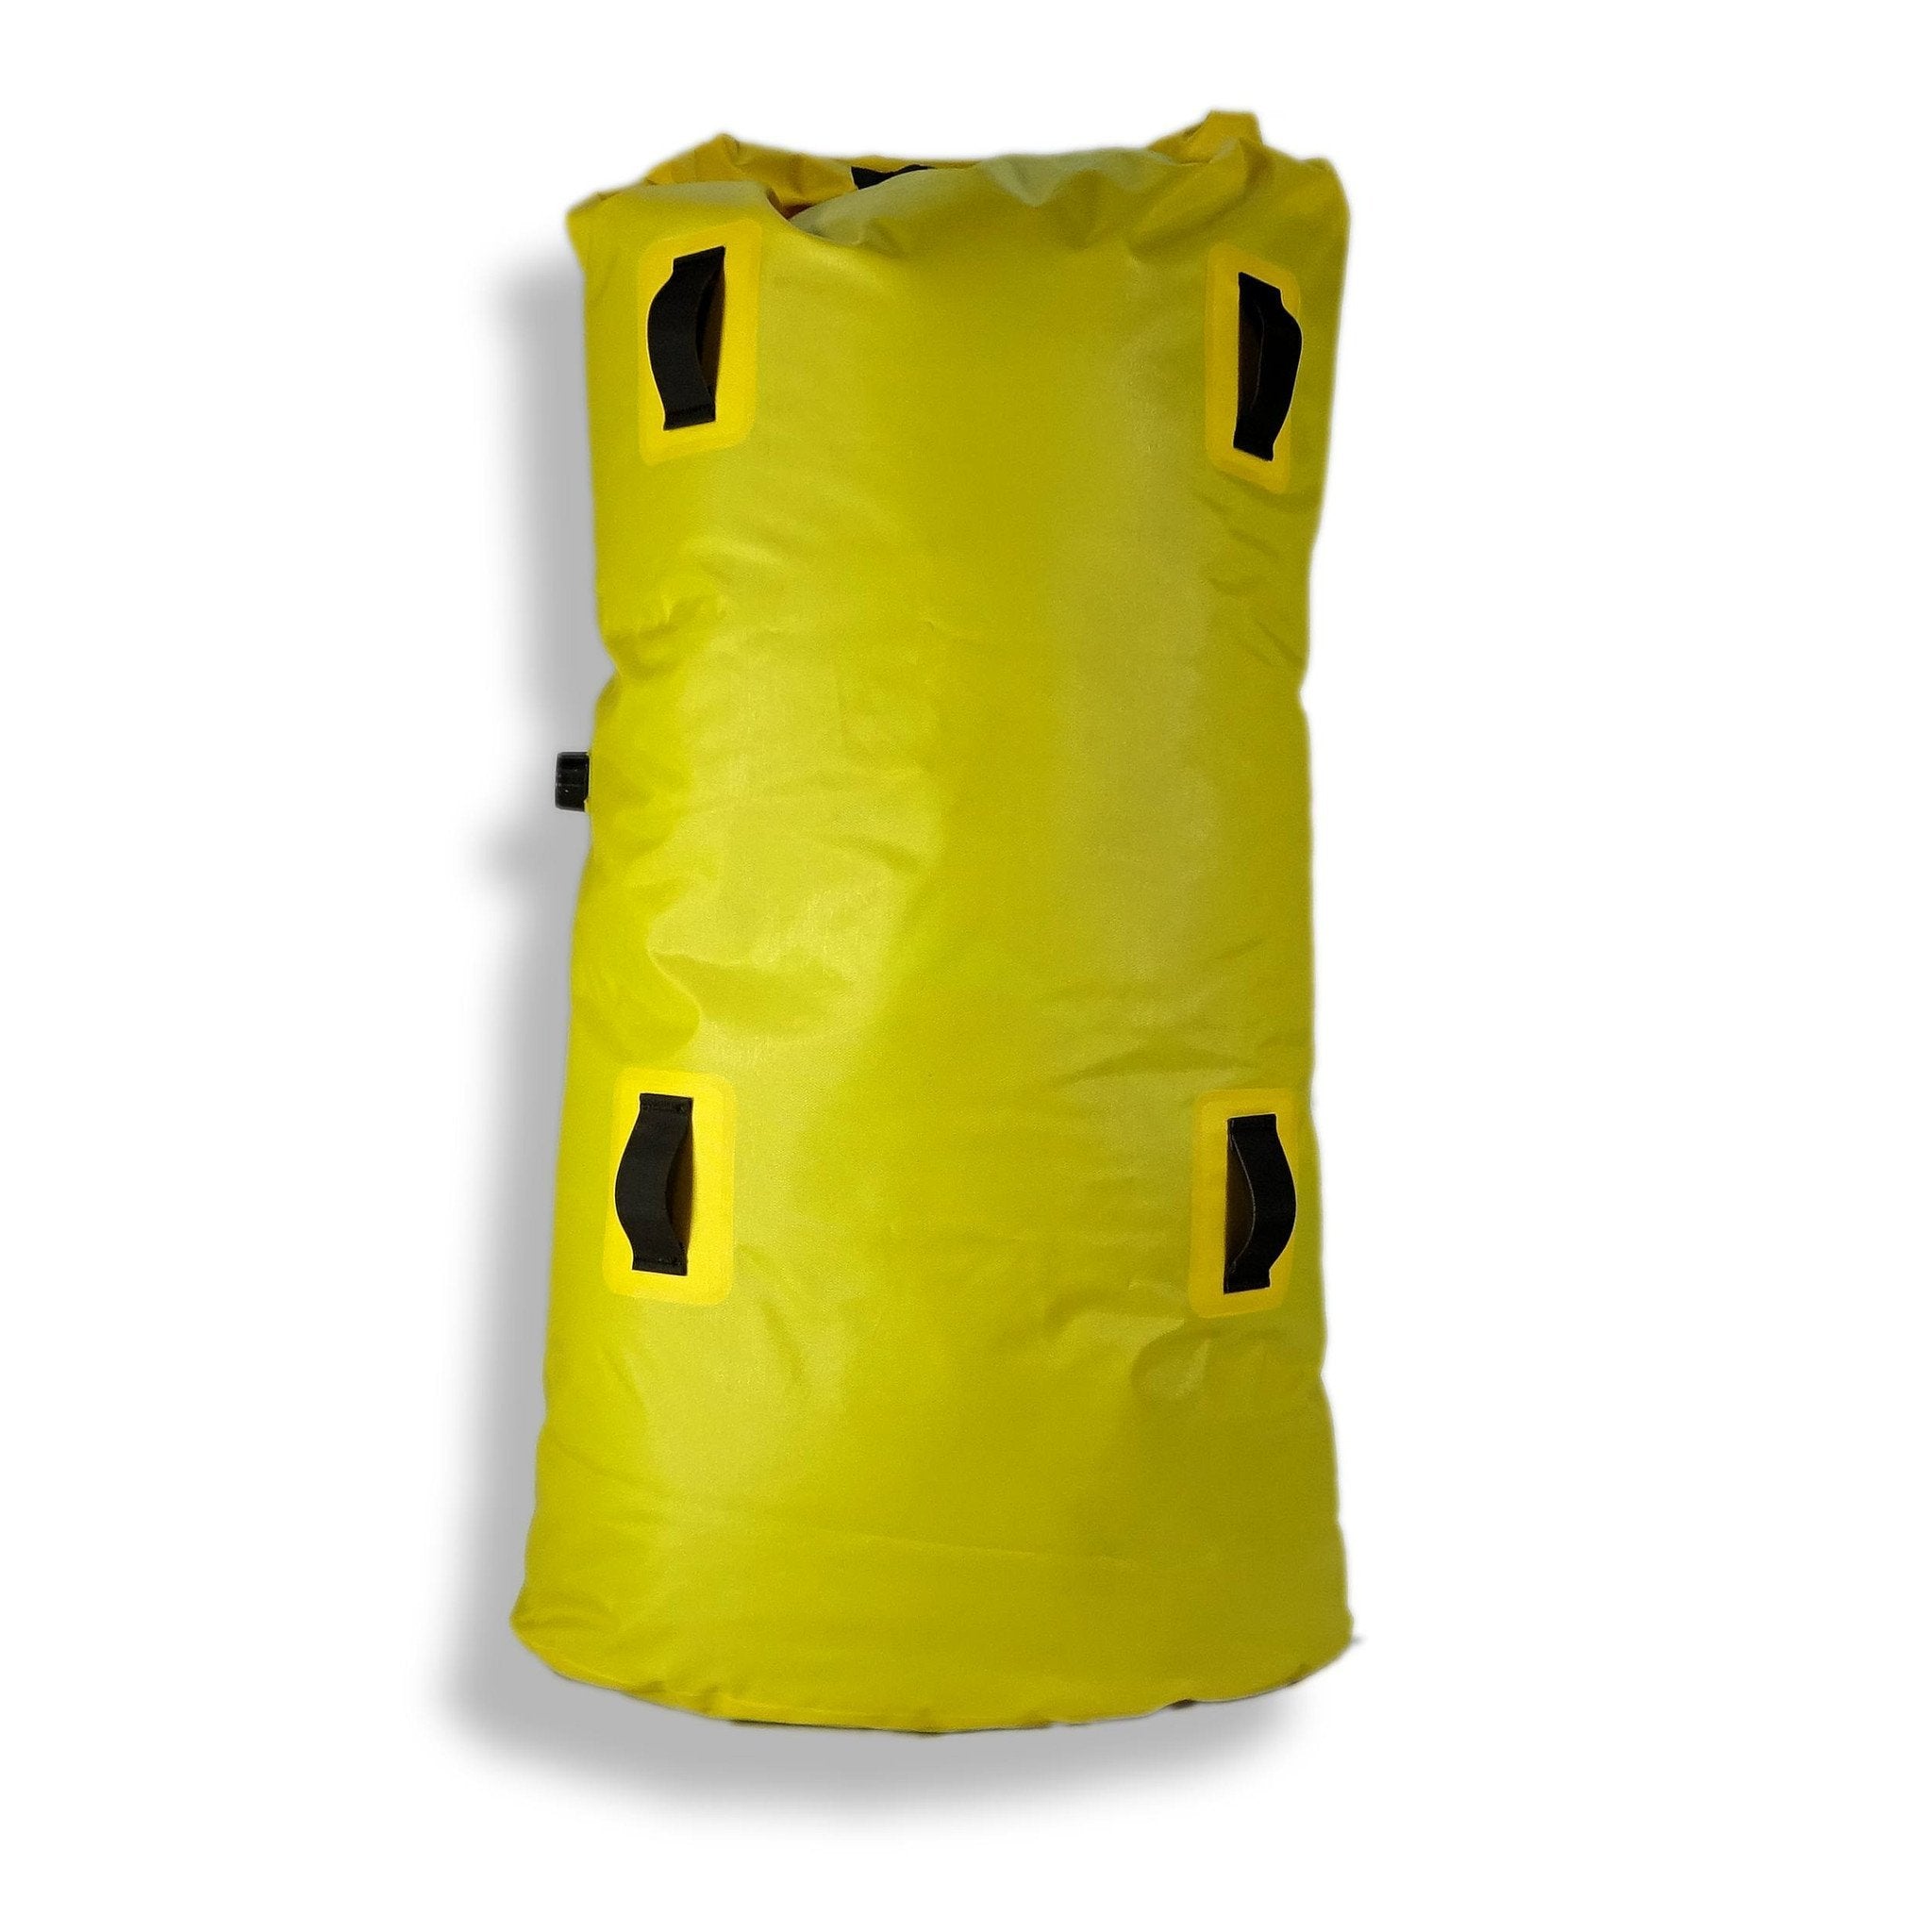 Yellow Drybag showing Four Lashing points